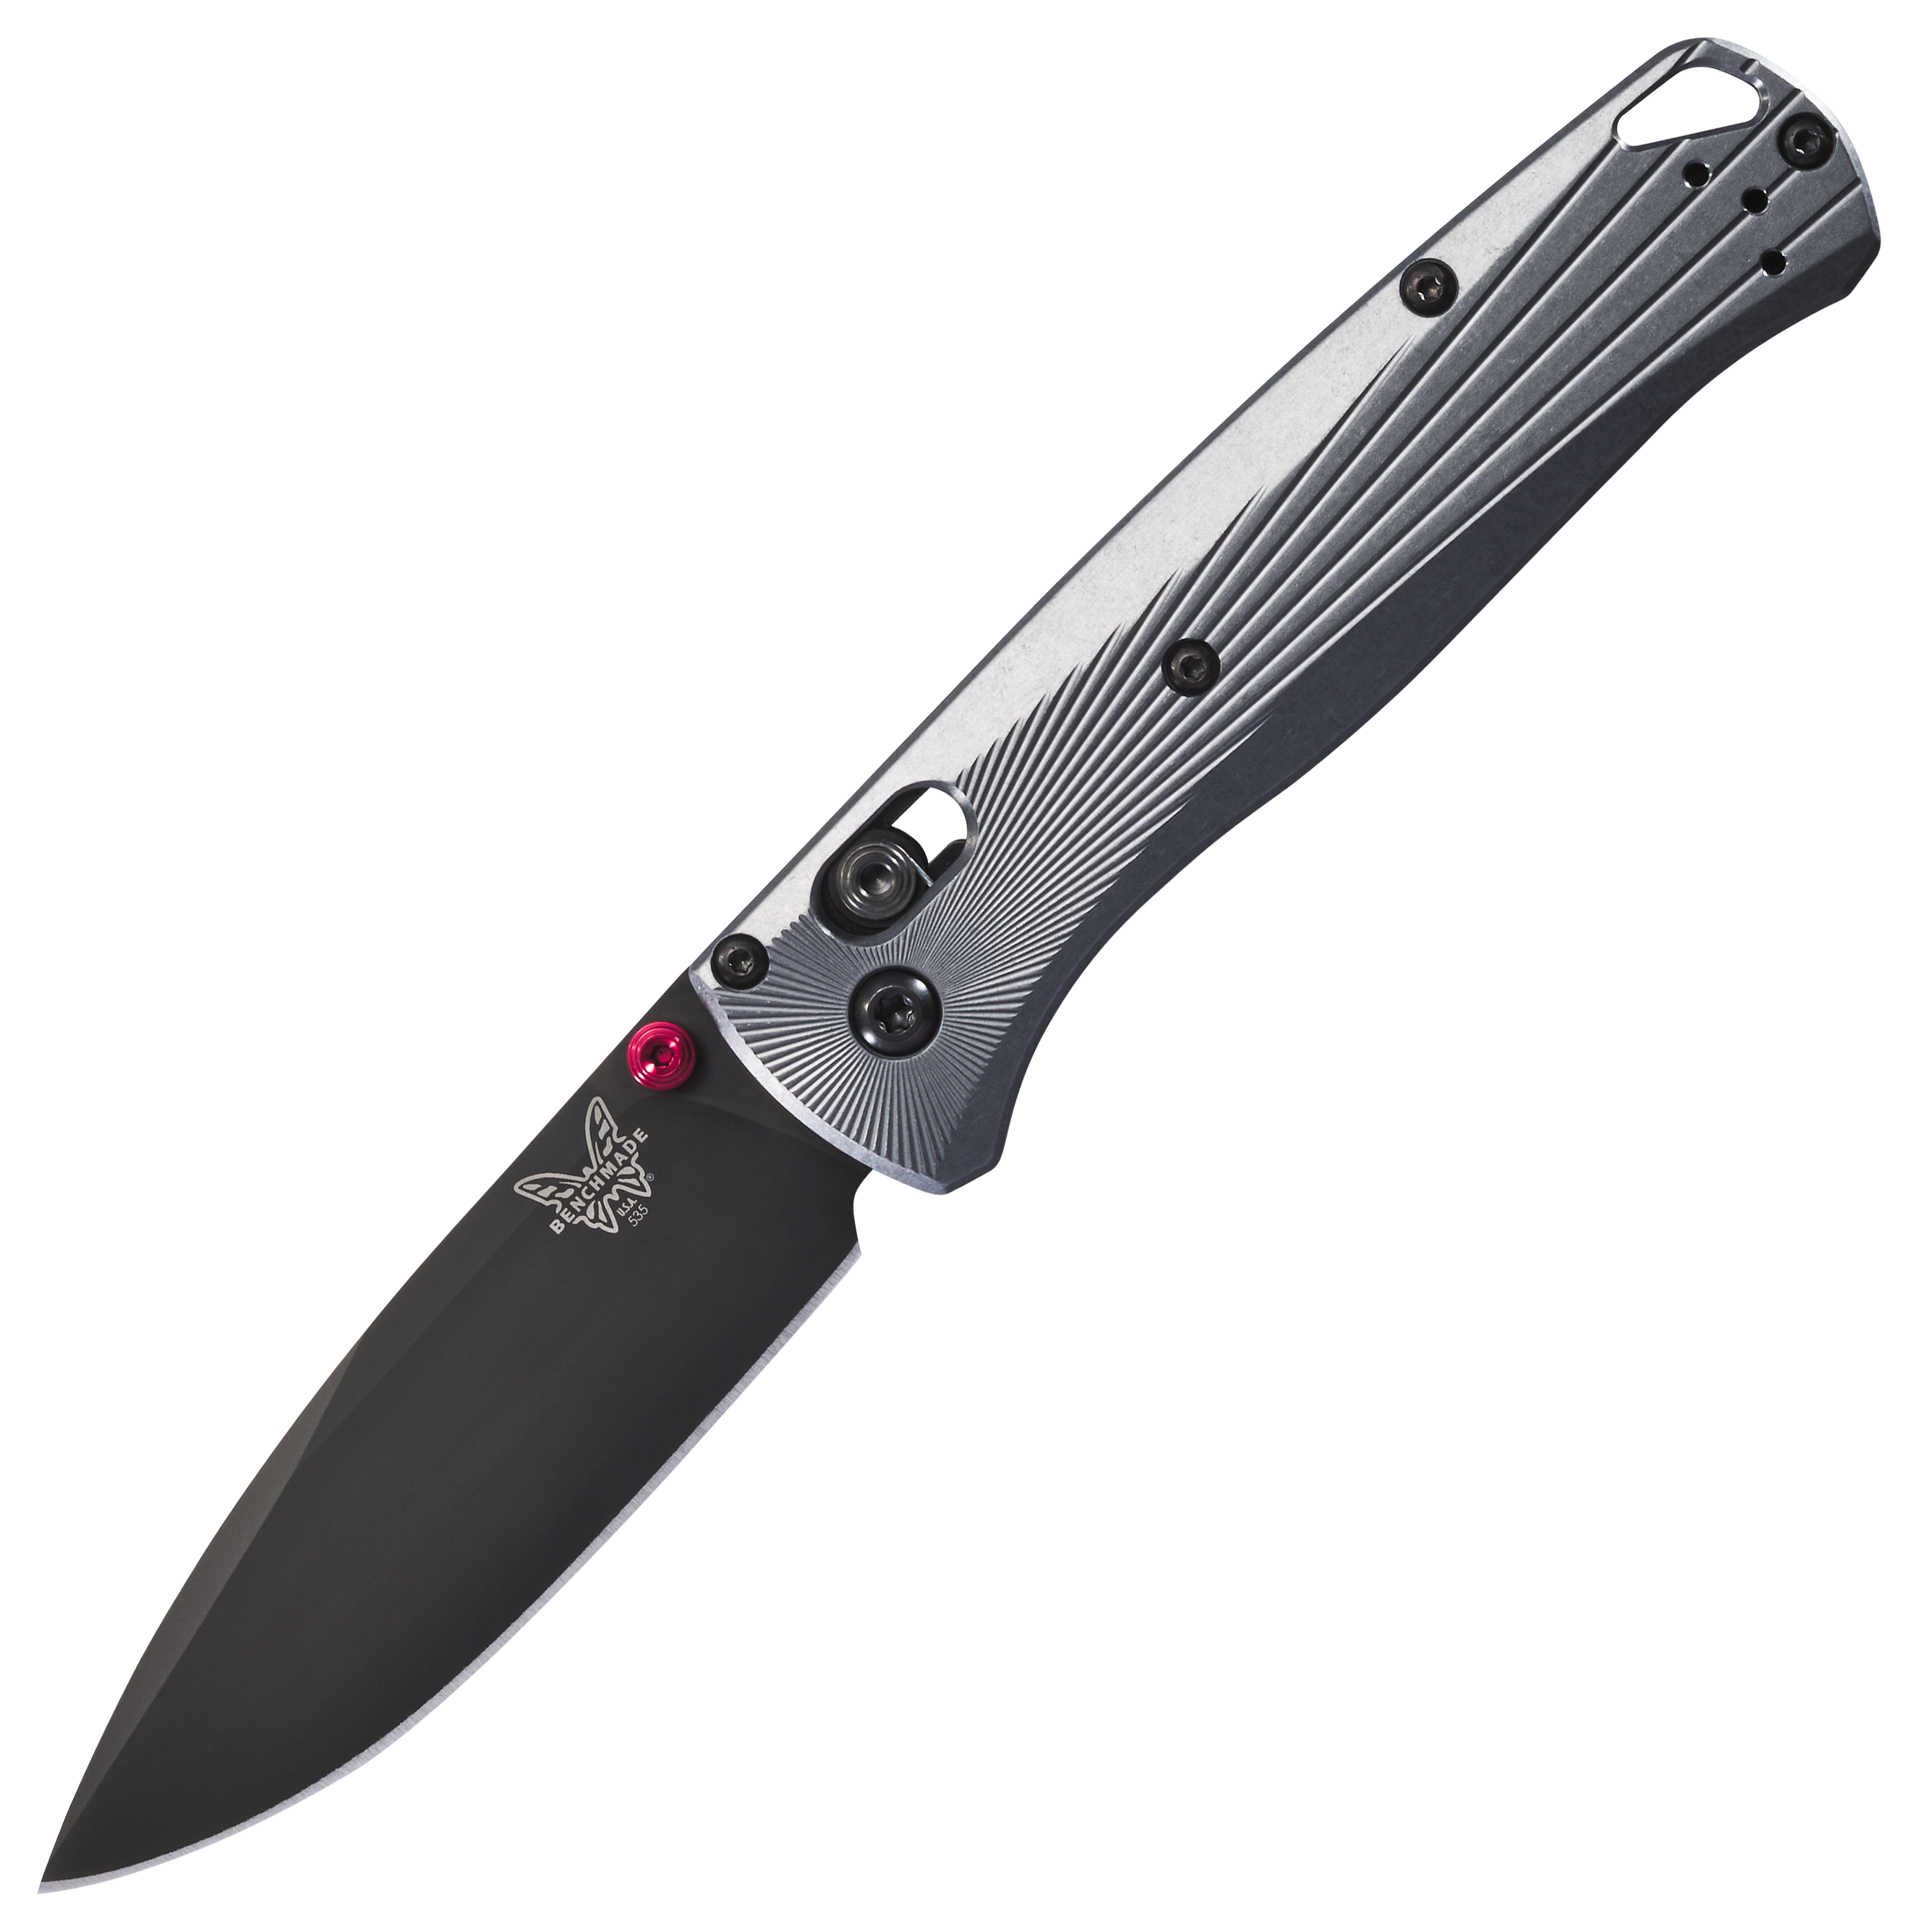 Benchmade 535bk-4 Bugout Knife Blade With Manual Knife Sharpener : Target